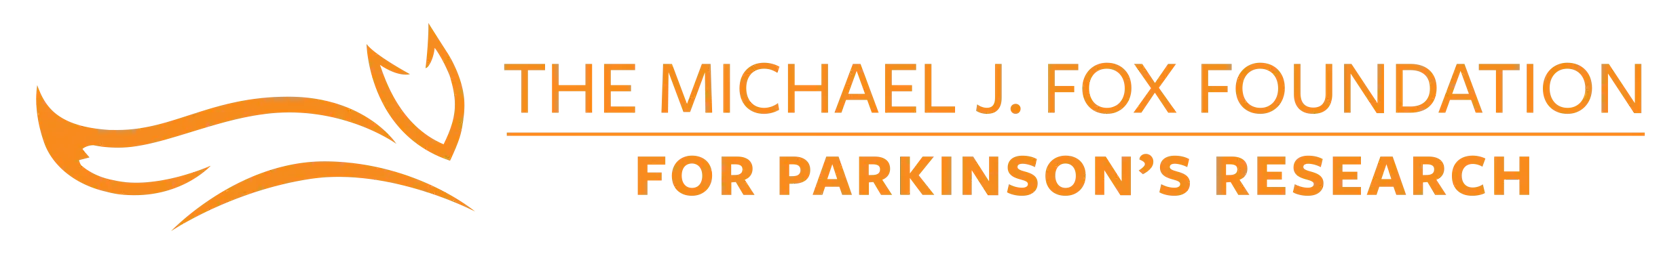 Logo-Michael-J-Fox-Foundation